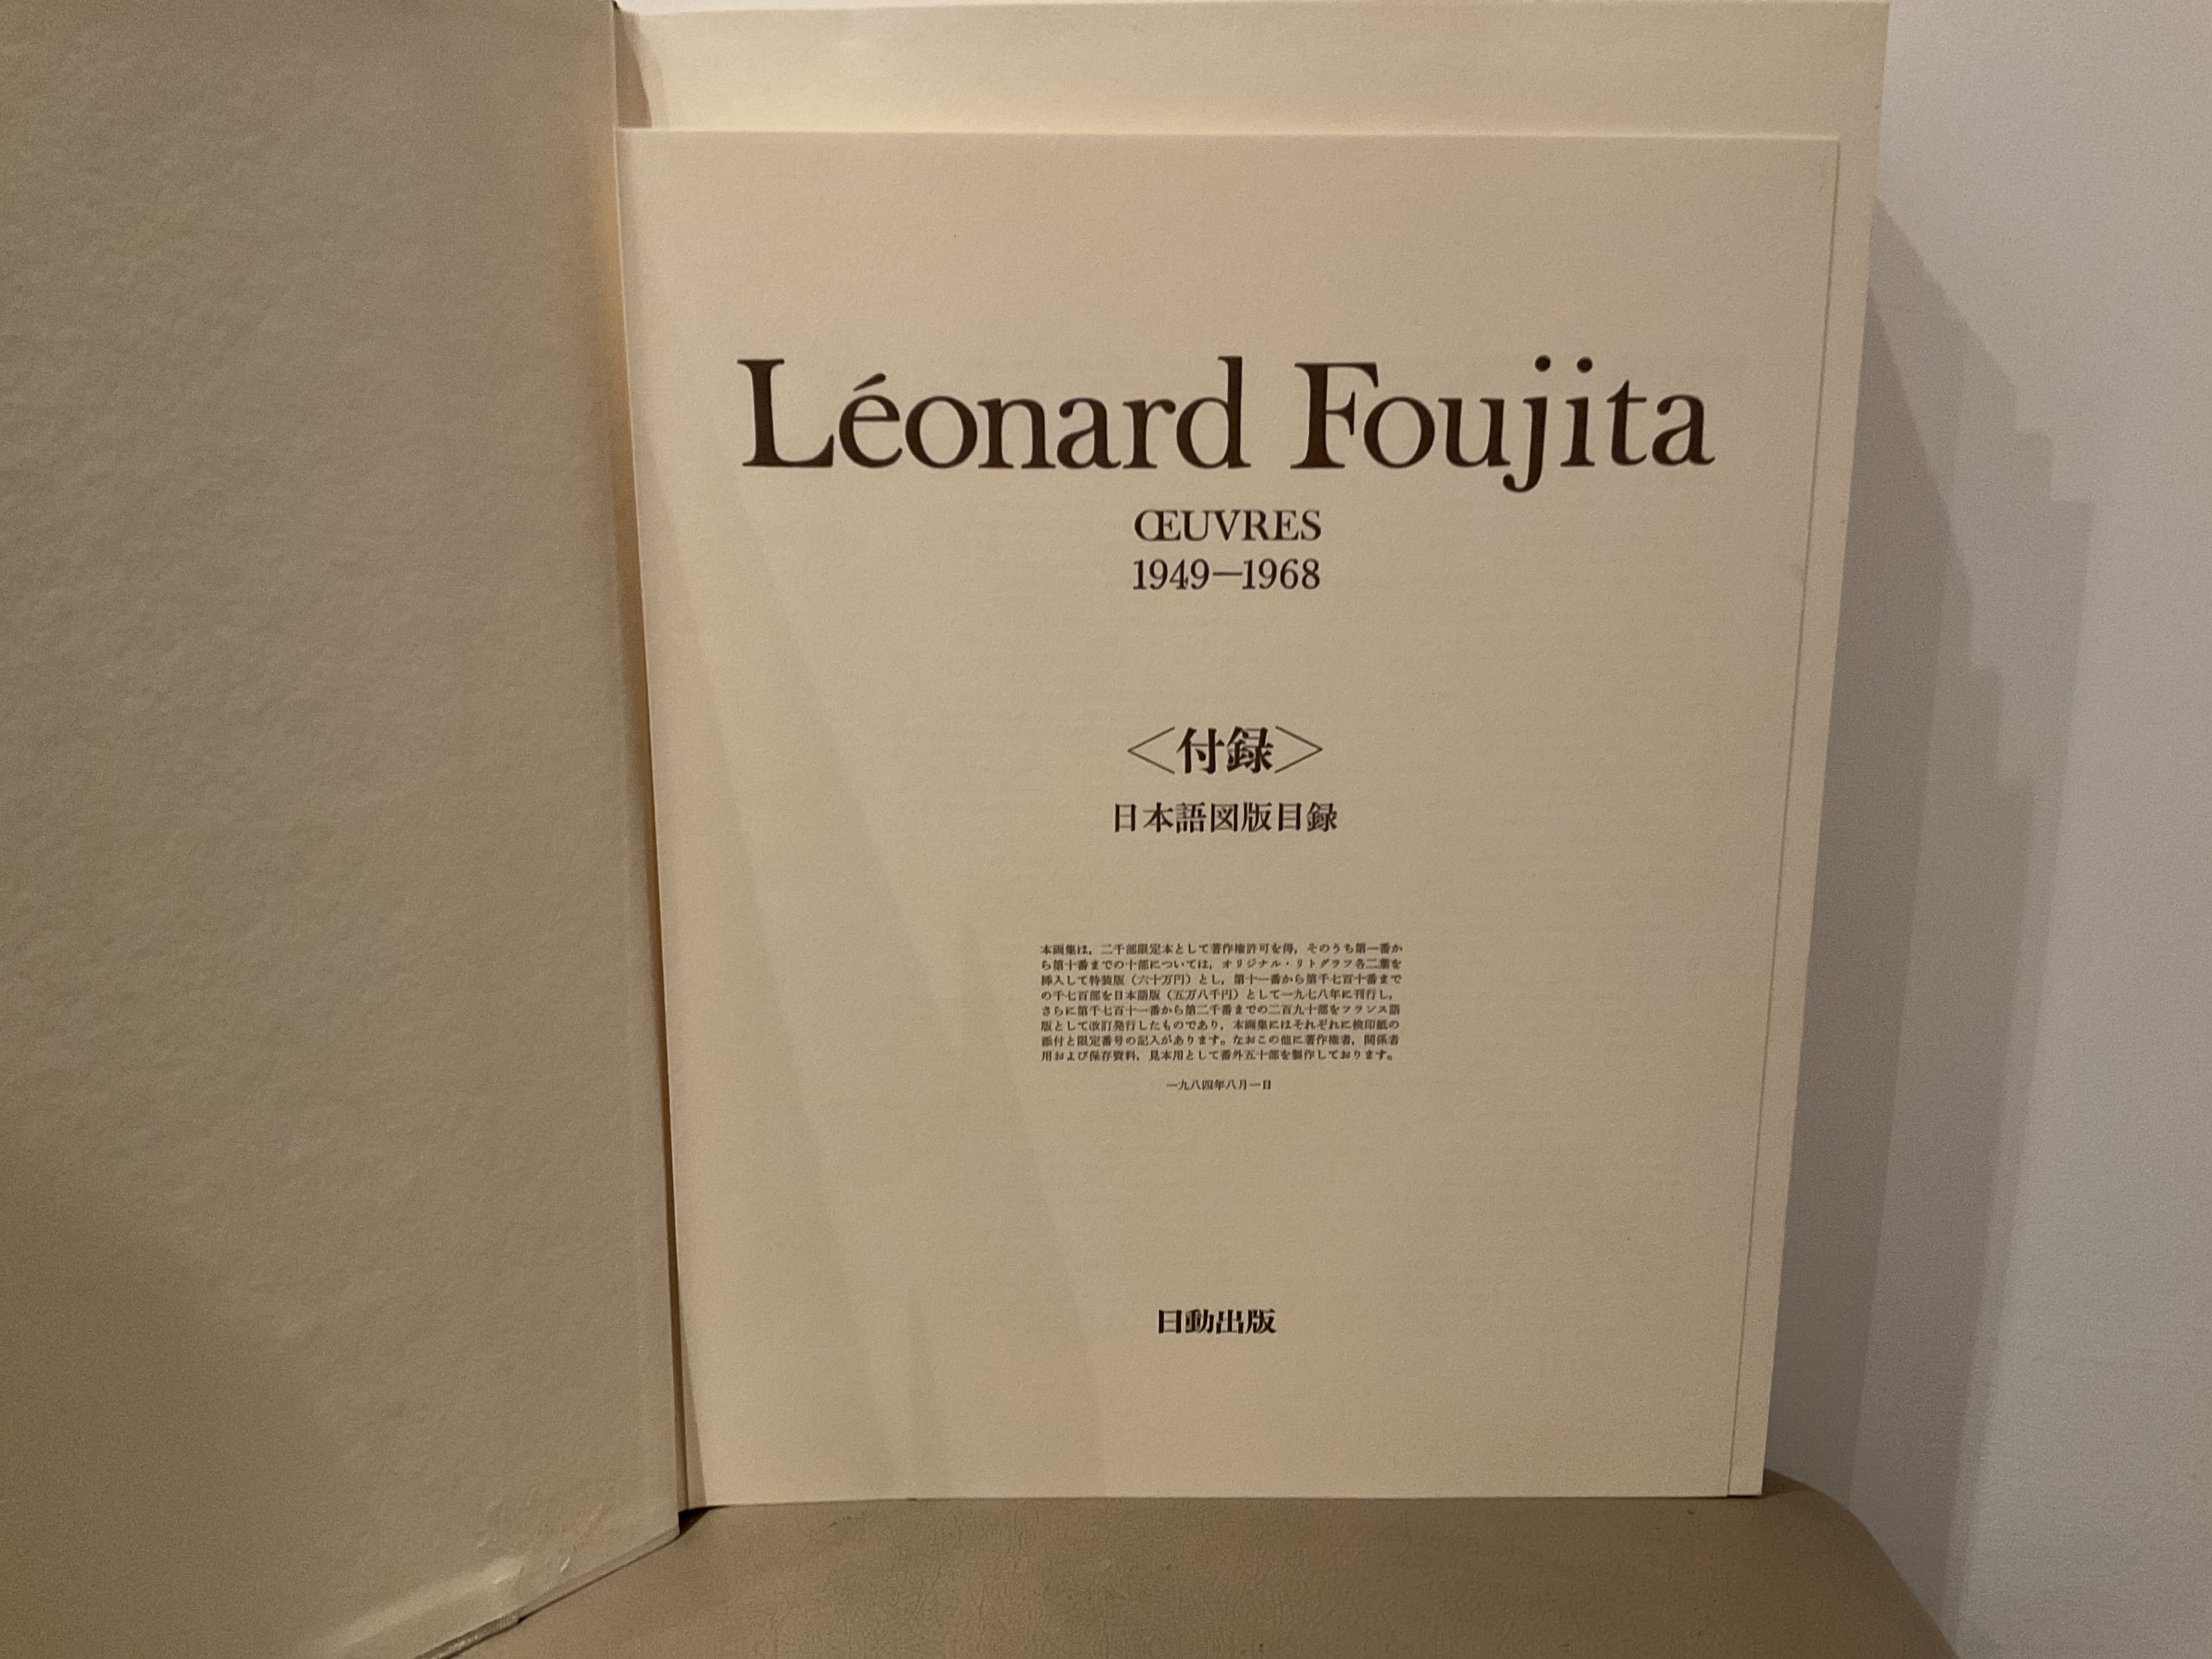 Libro Arte Leonard Foujita: Oeuvres 1949 - 1968